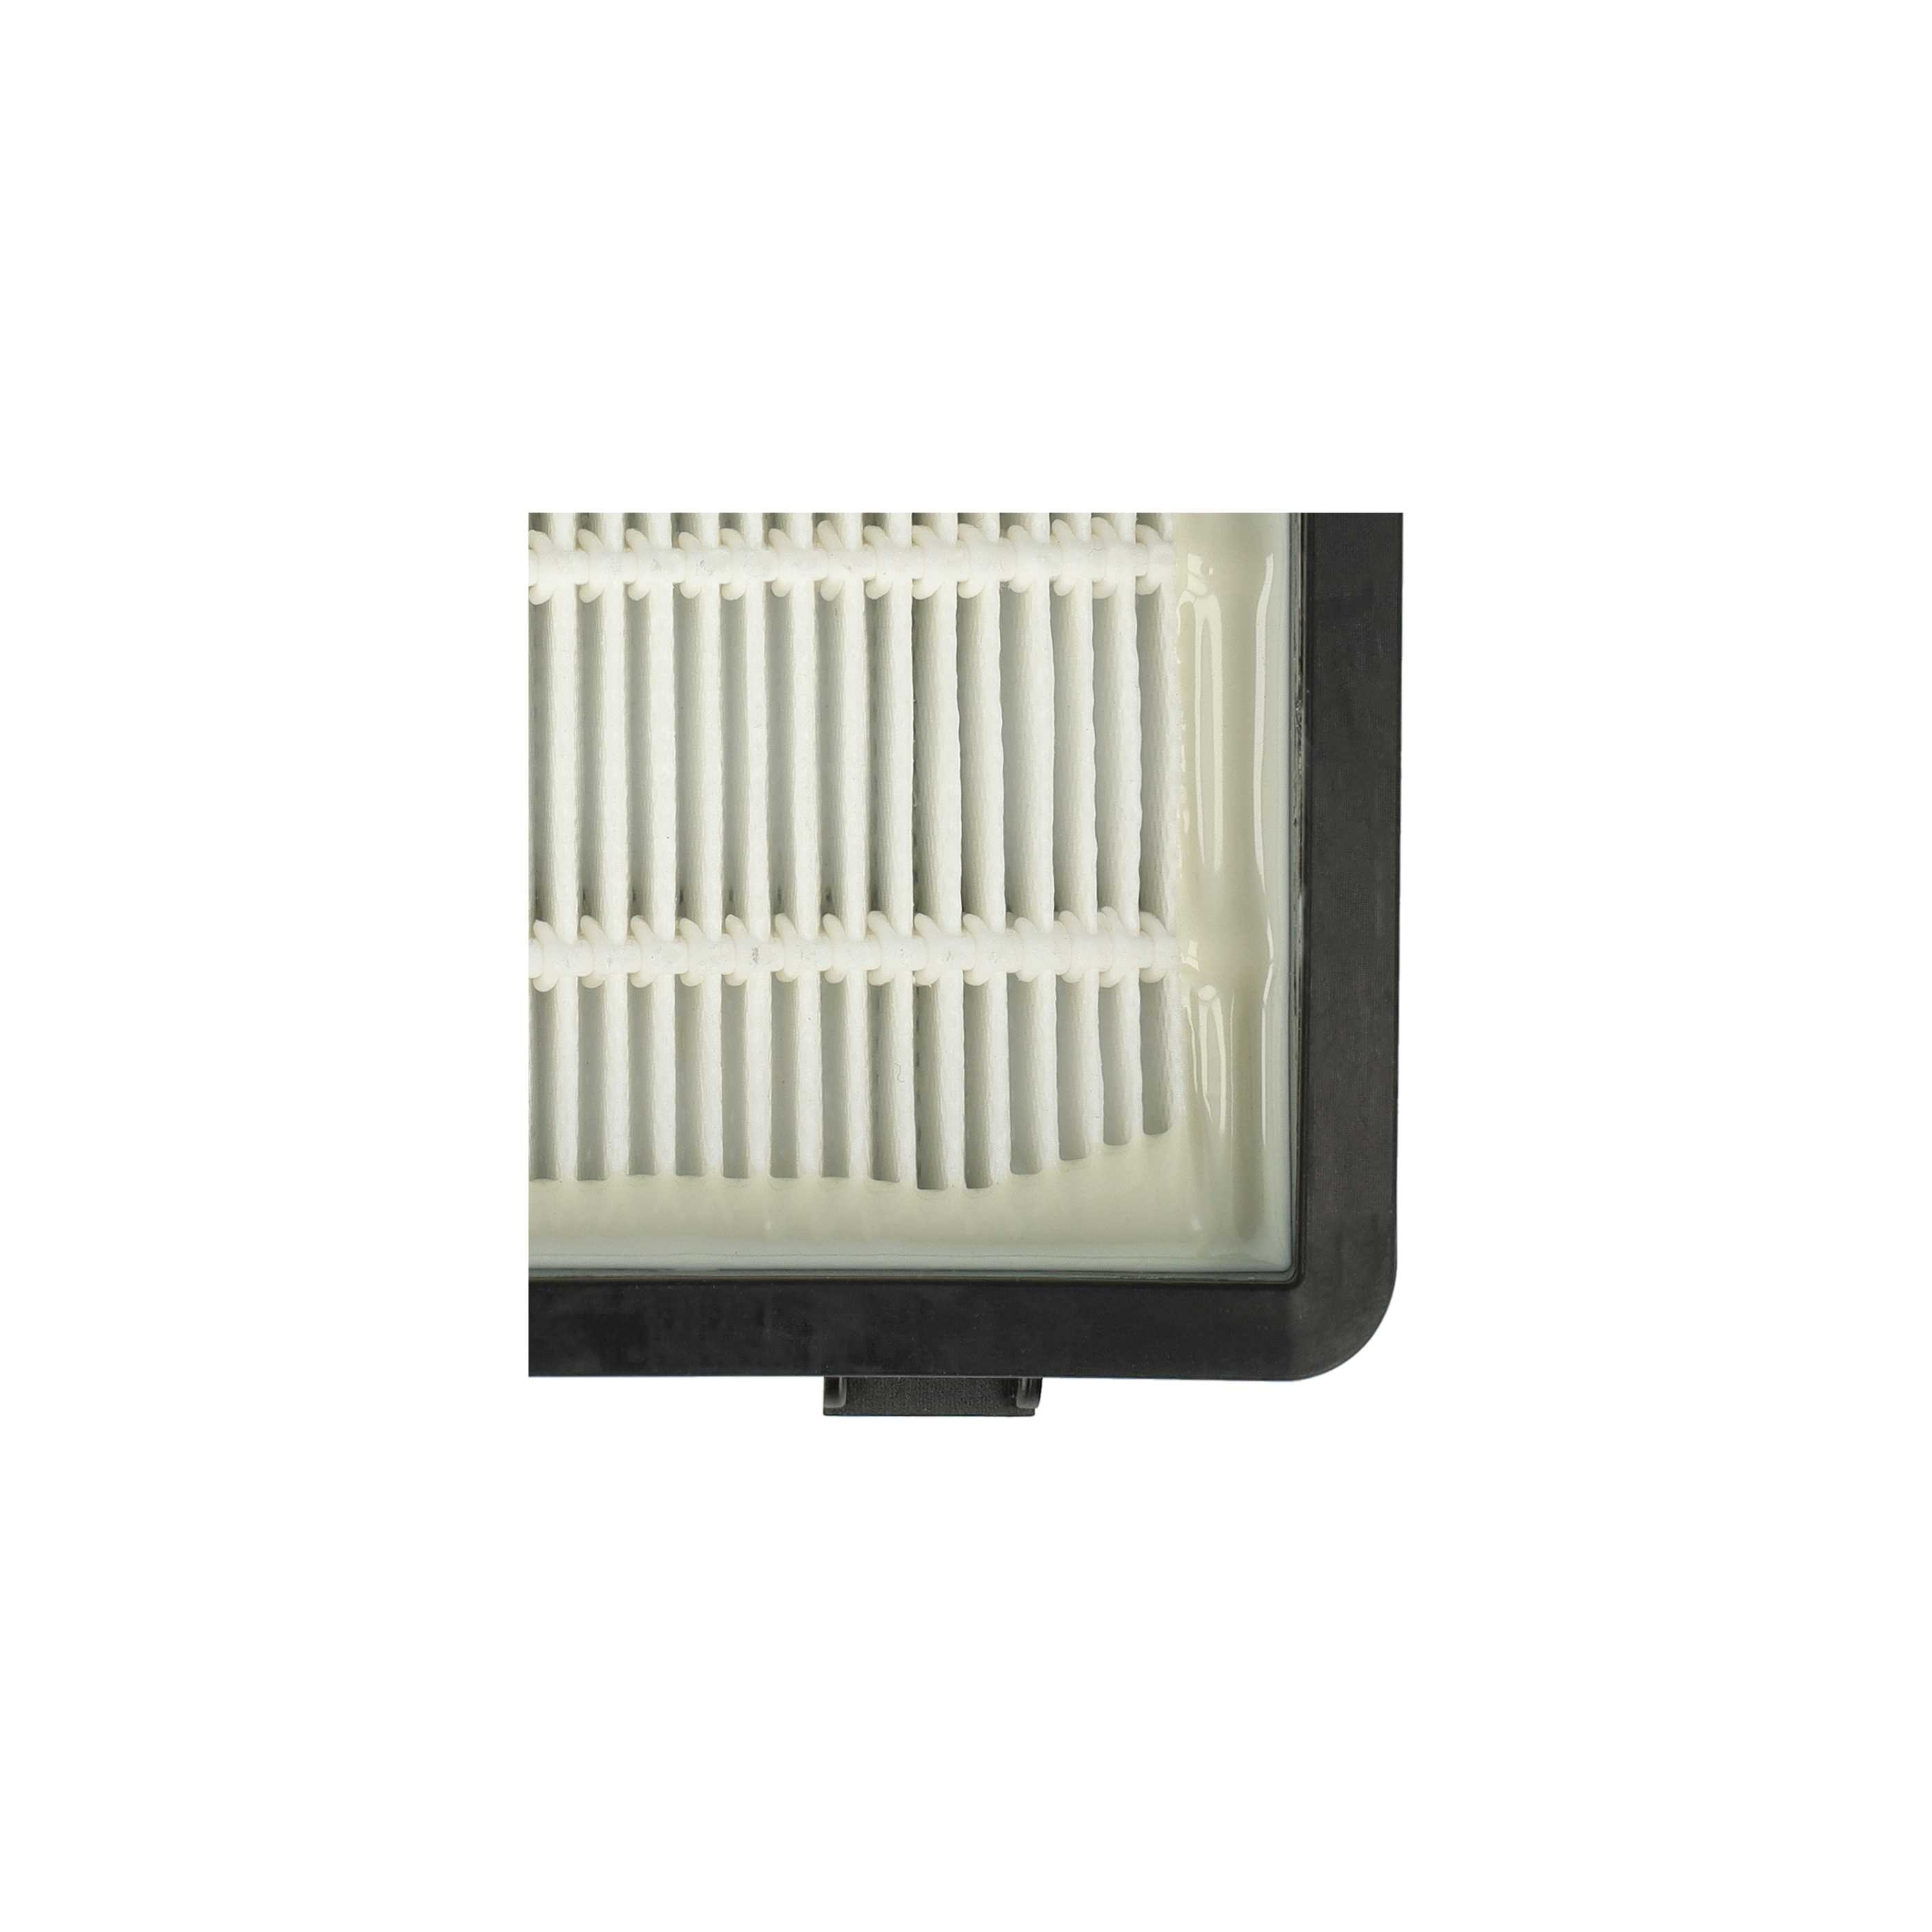 3x Filtro reemplaza Bosch 17001740 para aspiradora - filtro Hepa negro / blanco